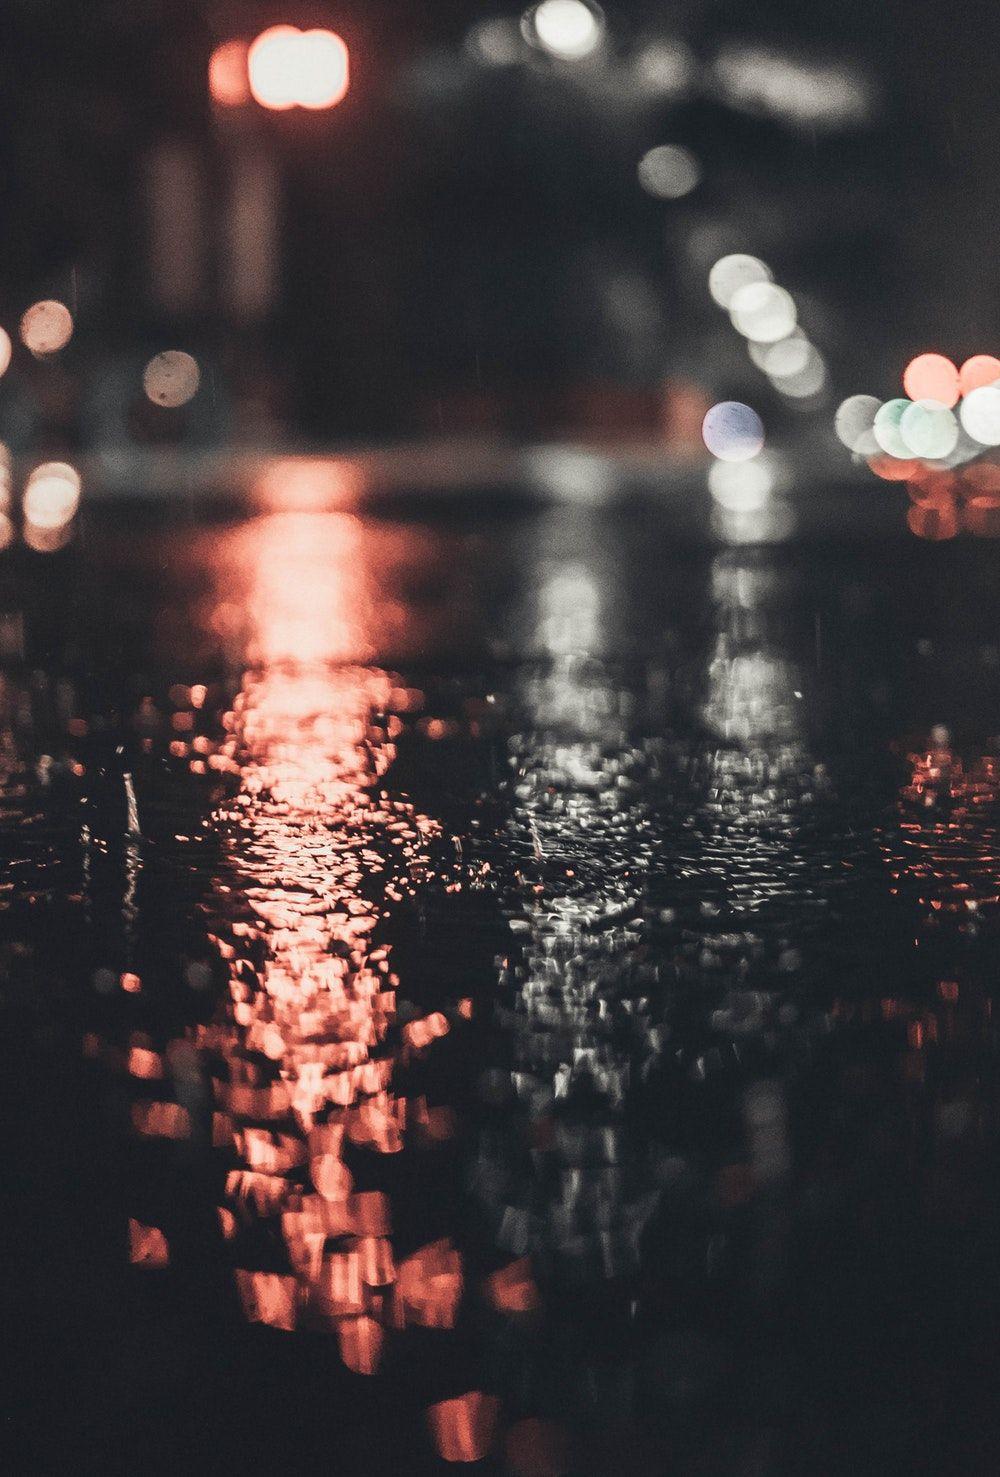 Rain Picture [HD]. Download Free Image